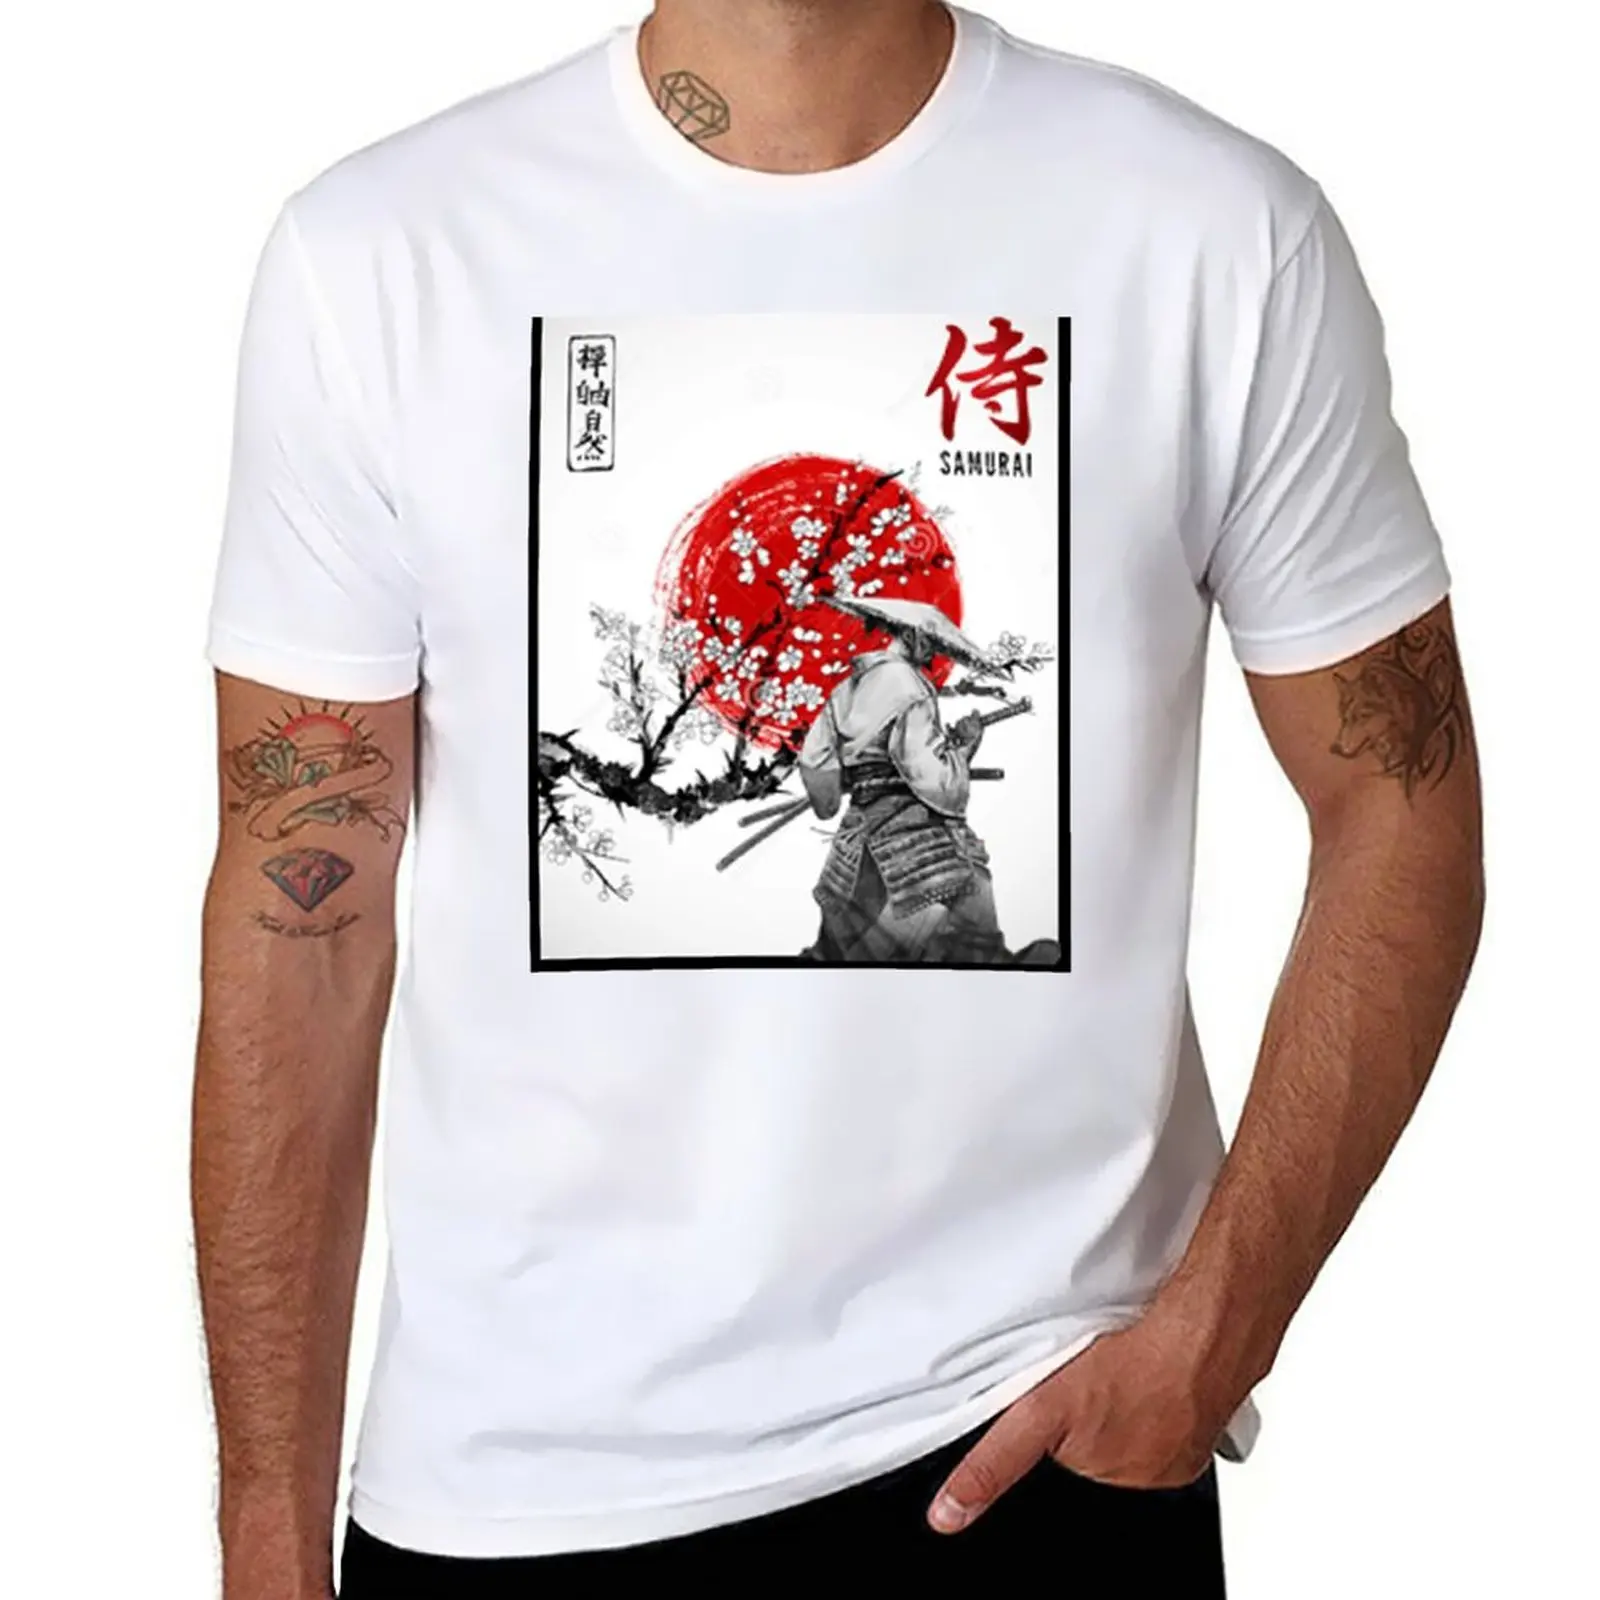 

New Samurai Warrior Japan Sun and Blossoms T-Shirt hippie clothes sports fan t-shirts Short sleeve t shirts for men pack